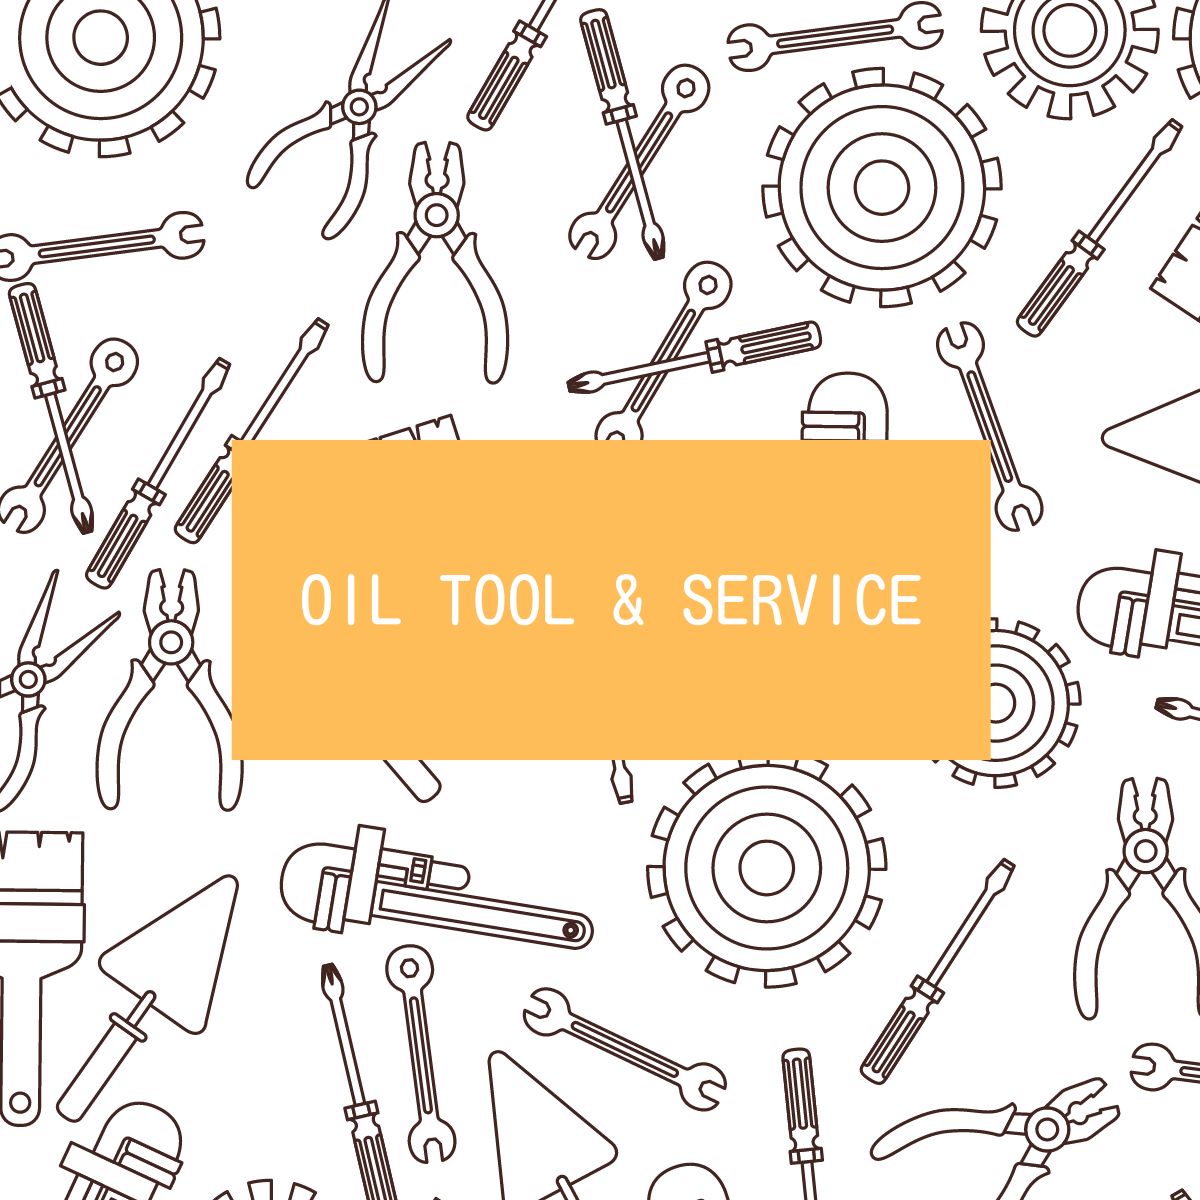 Oil Tool & Service